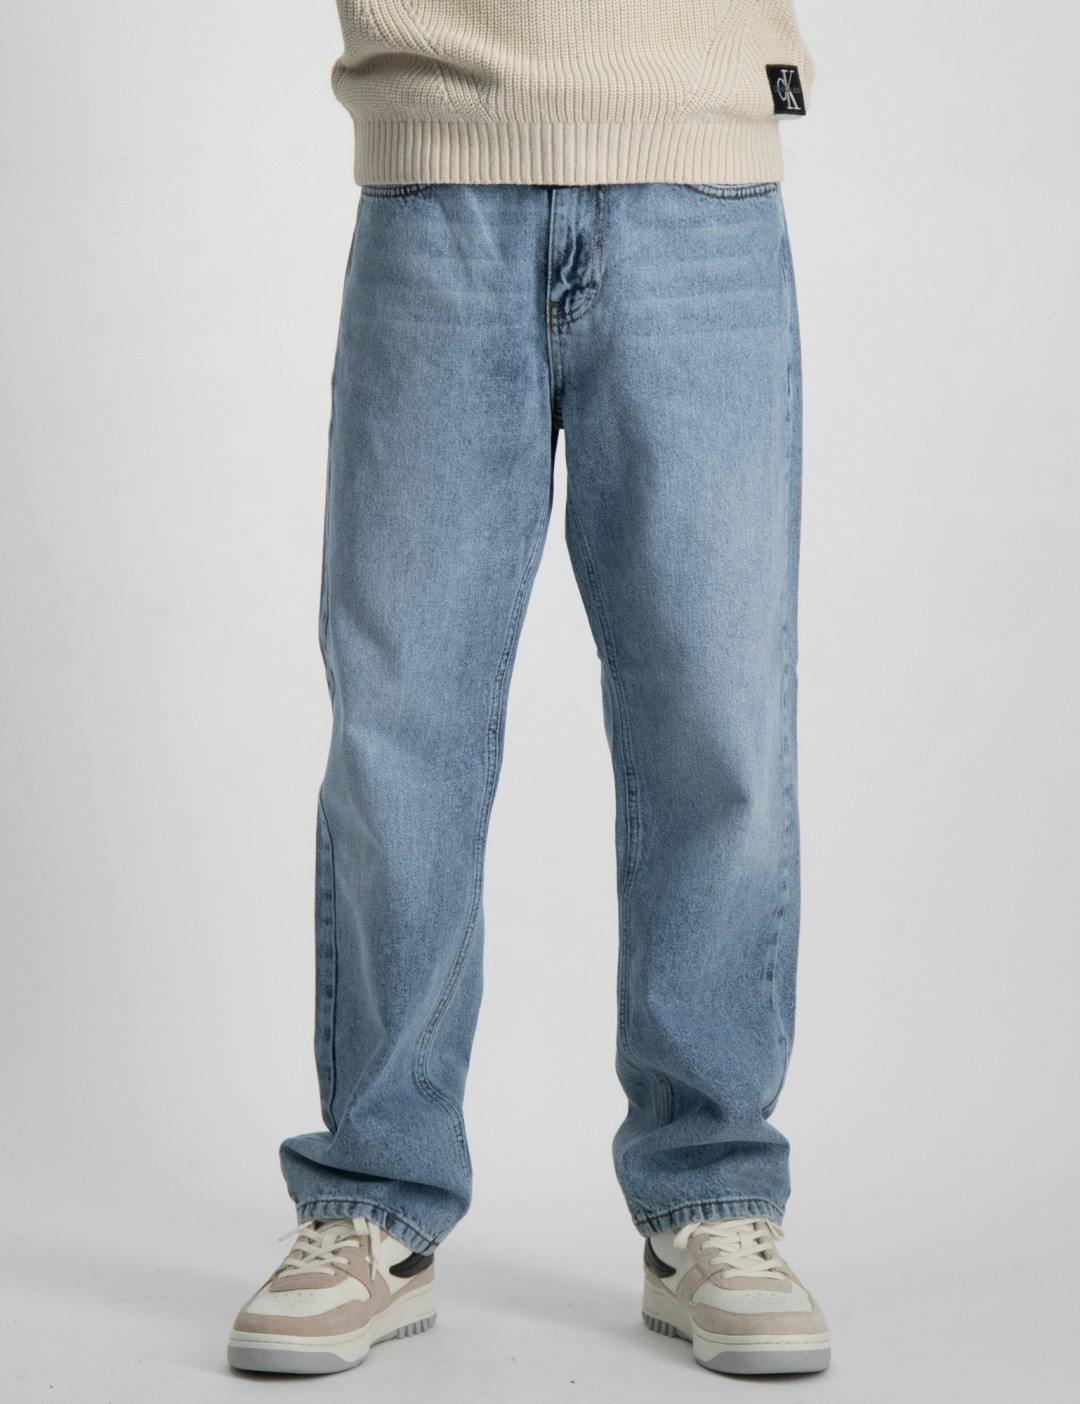 Hamon Blue Vintage Jeans